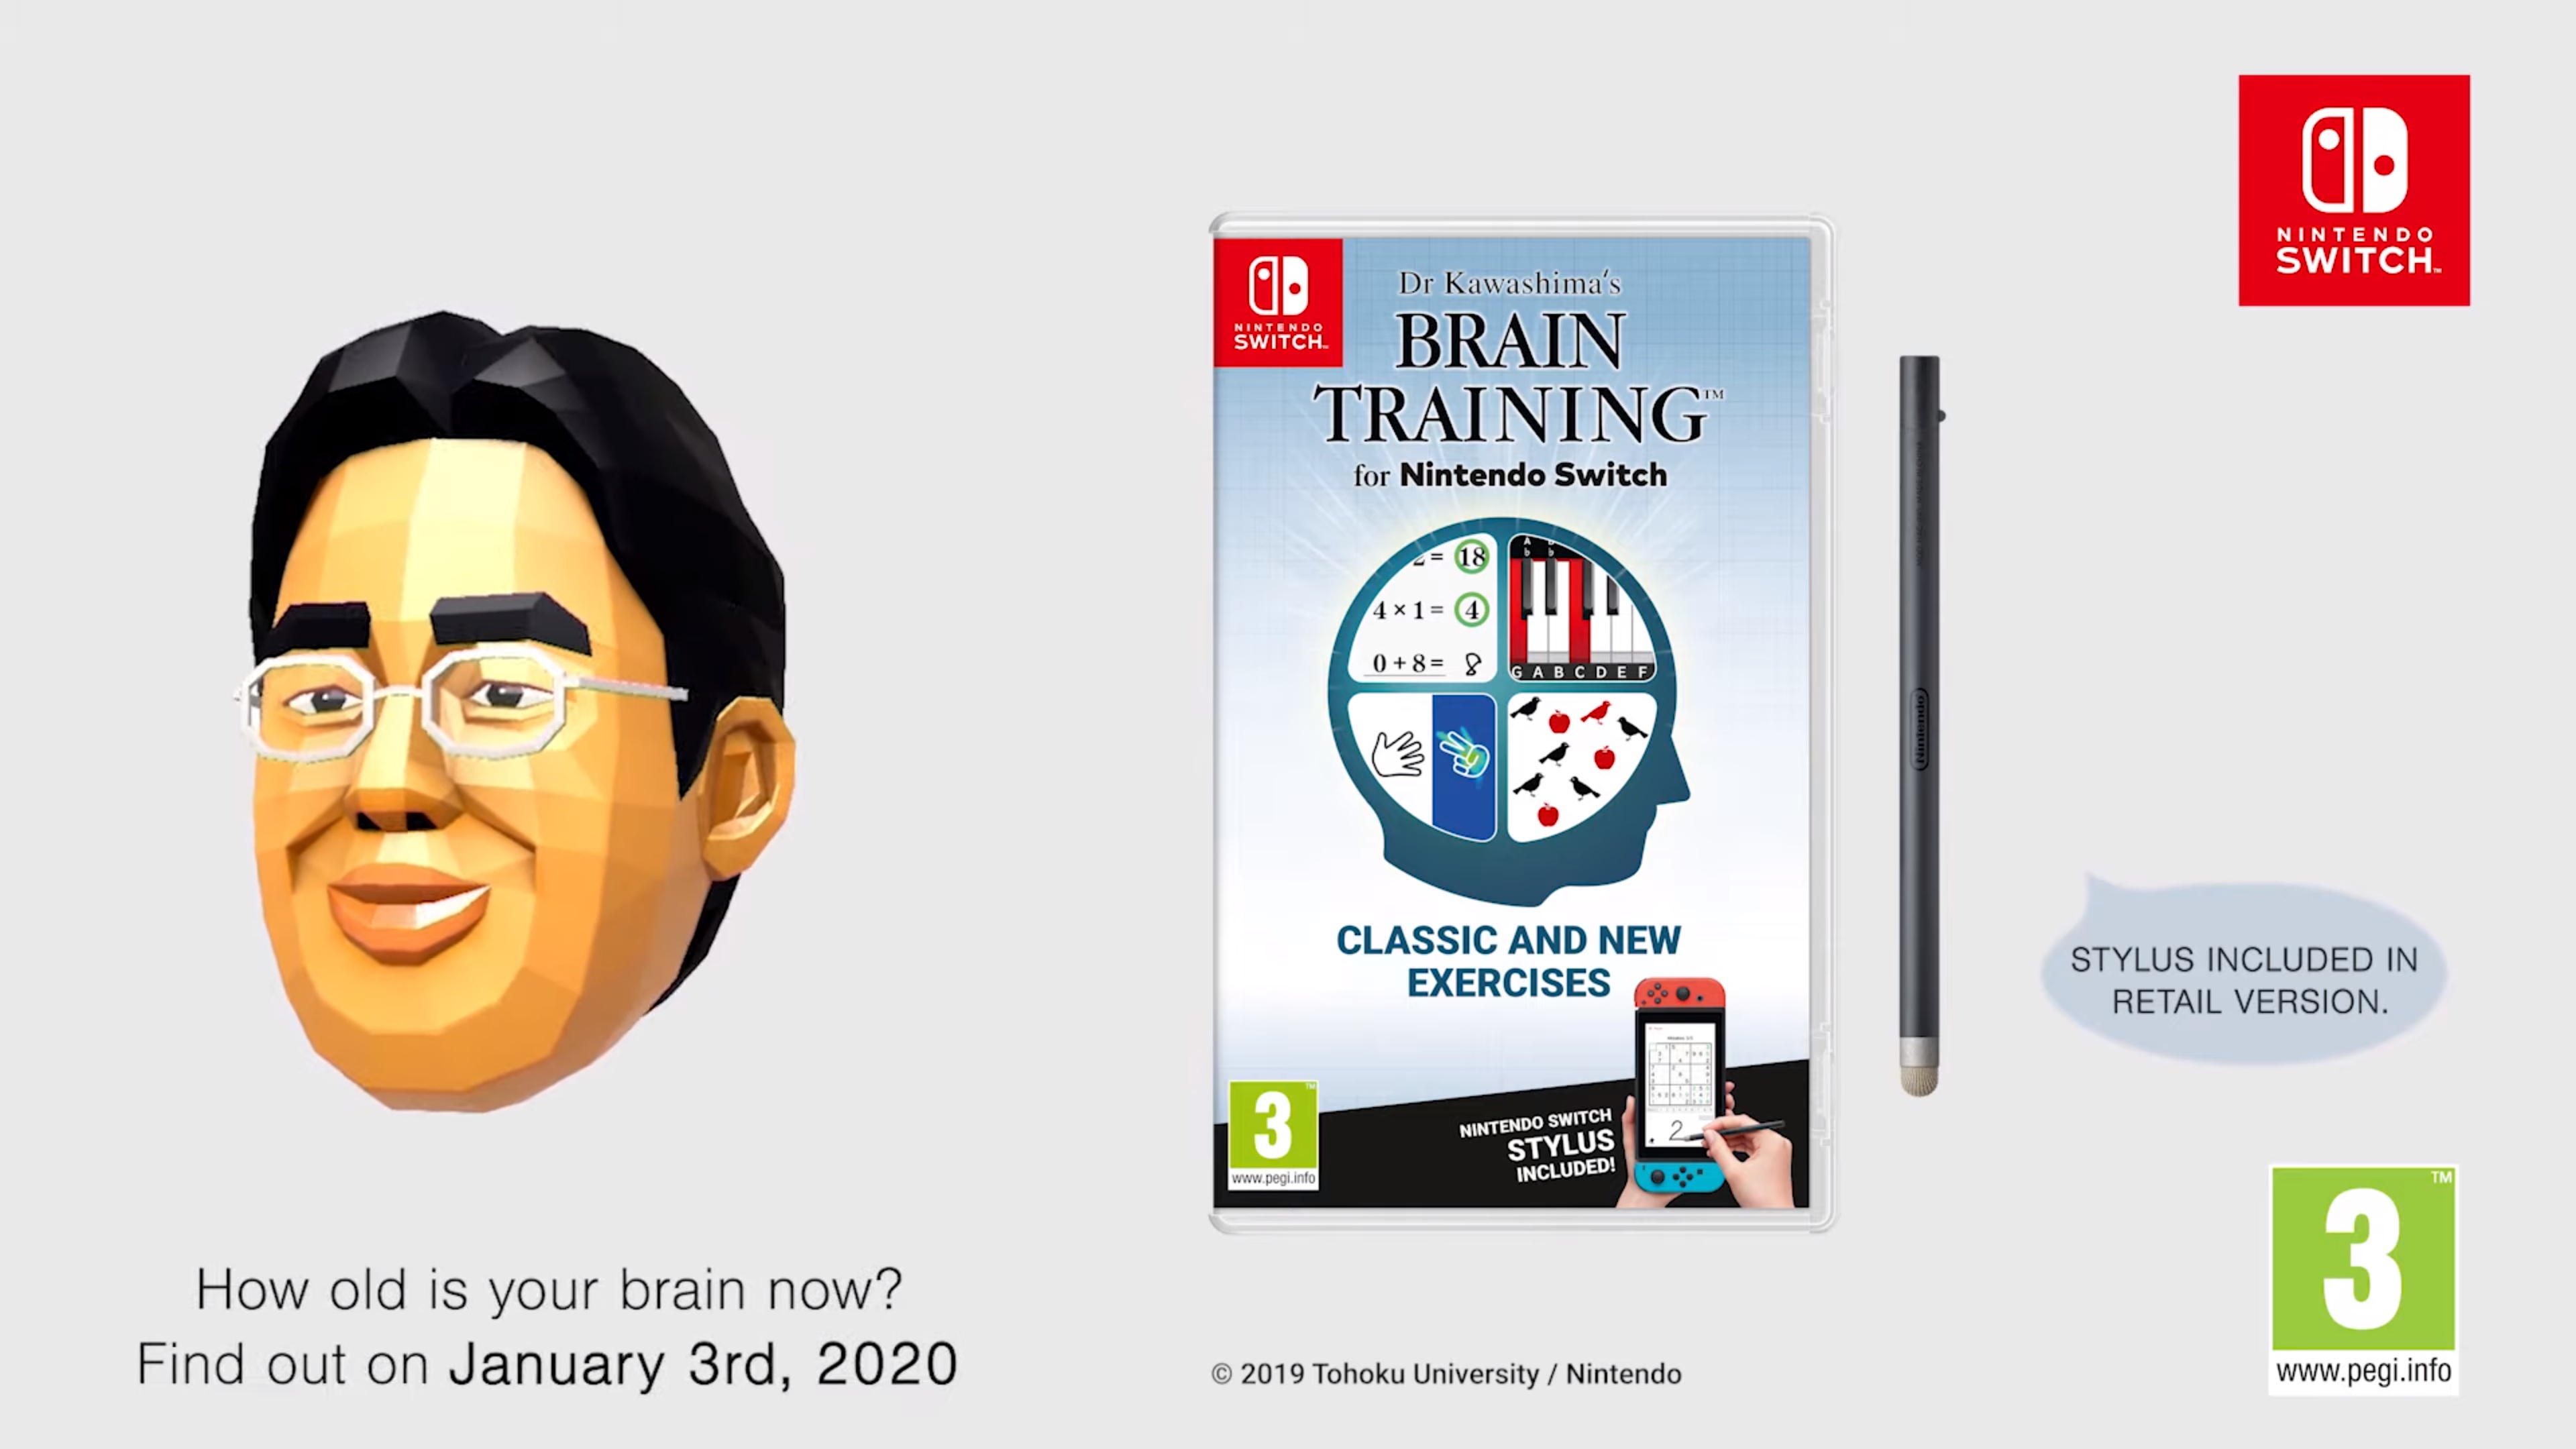 dr kawashima's brain training for nintendo switch review